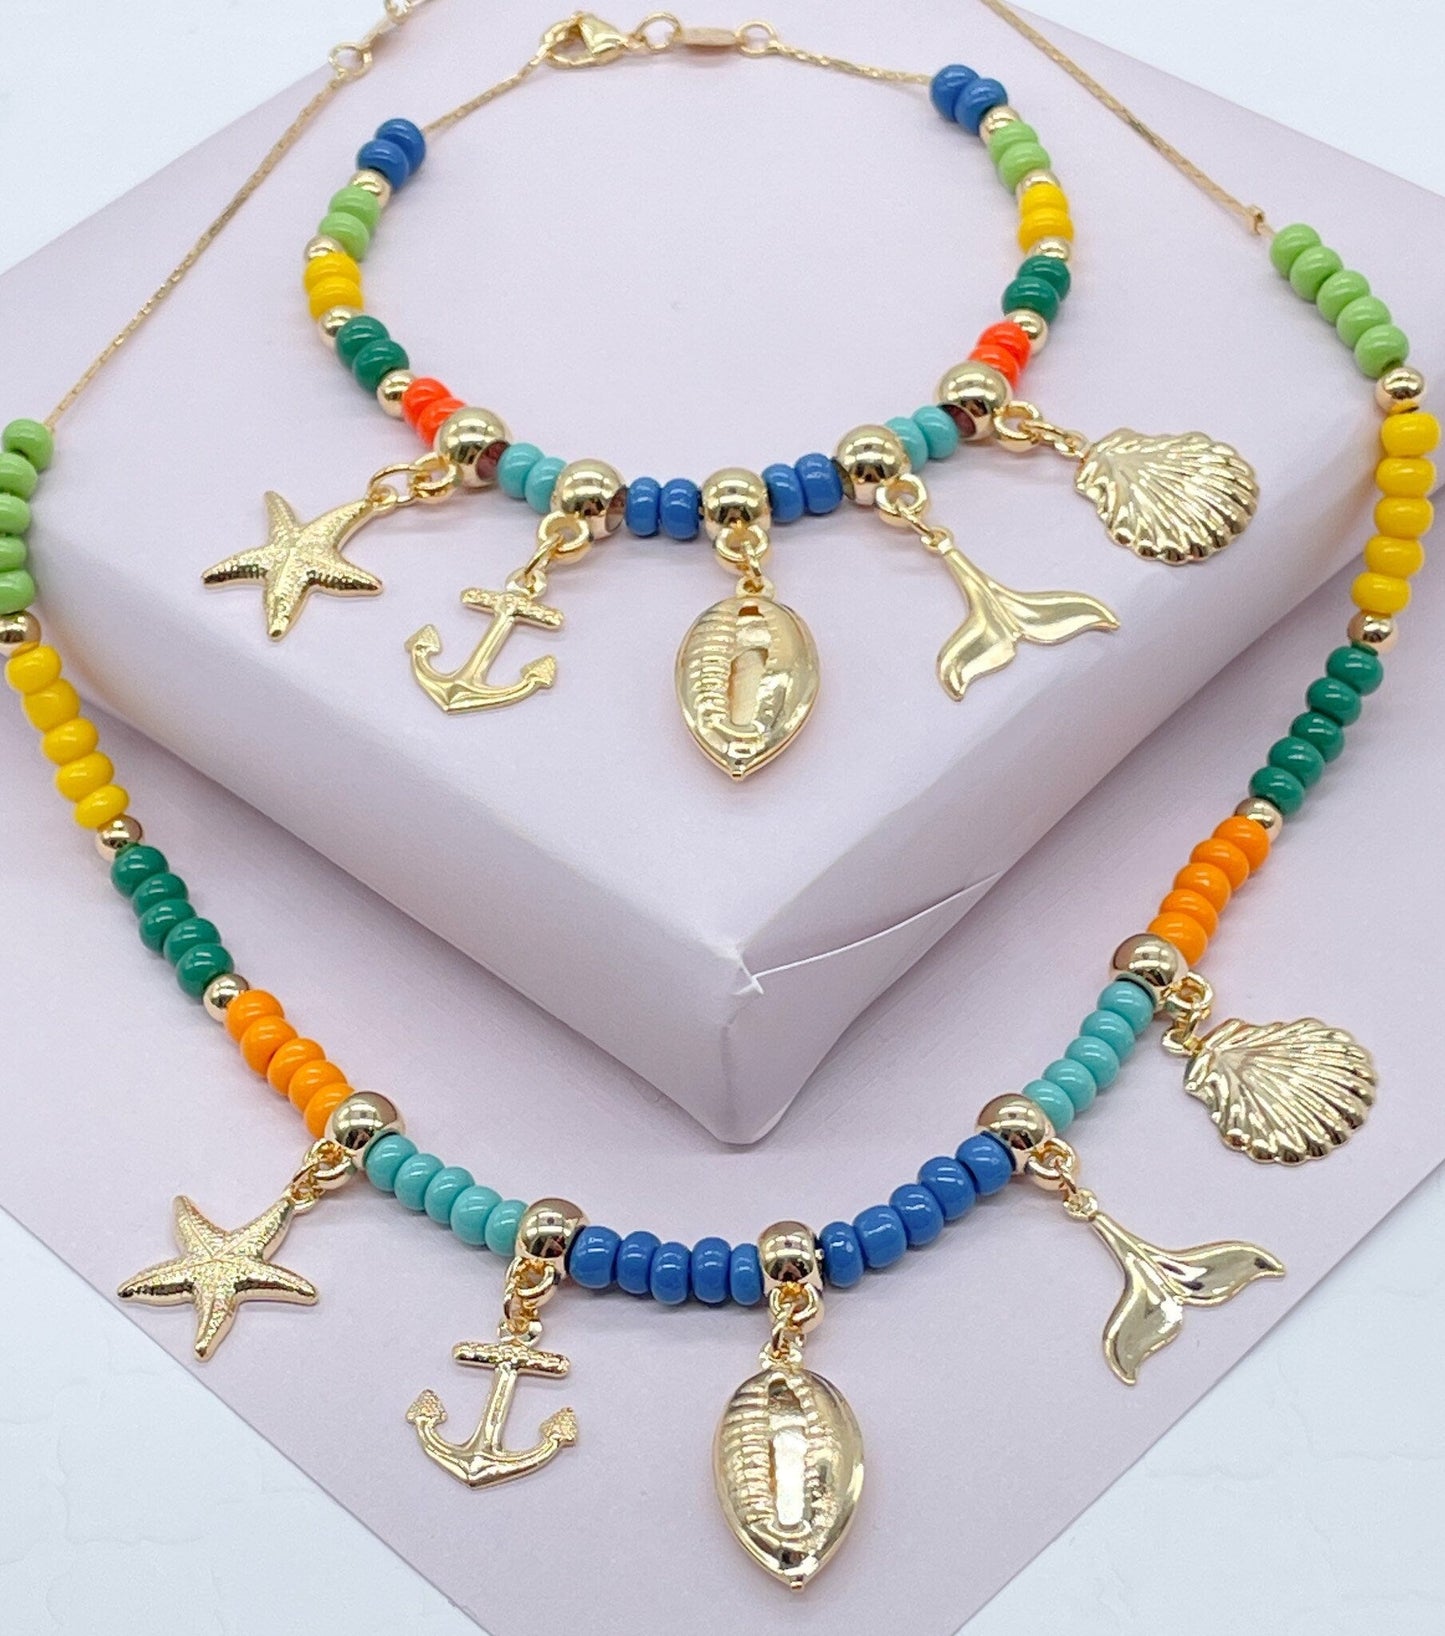 18k Gold Layered Colorful Beads Sea Inspired Charm Set Bracelet n Necklace Marine